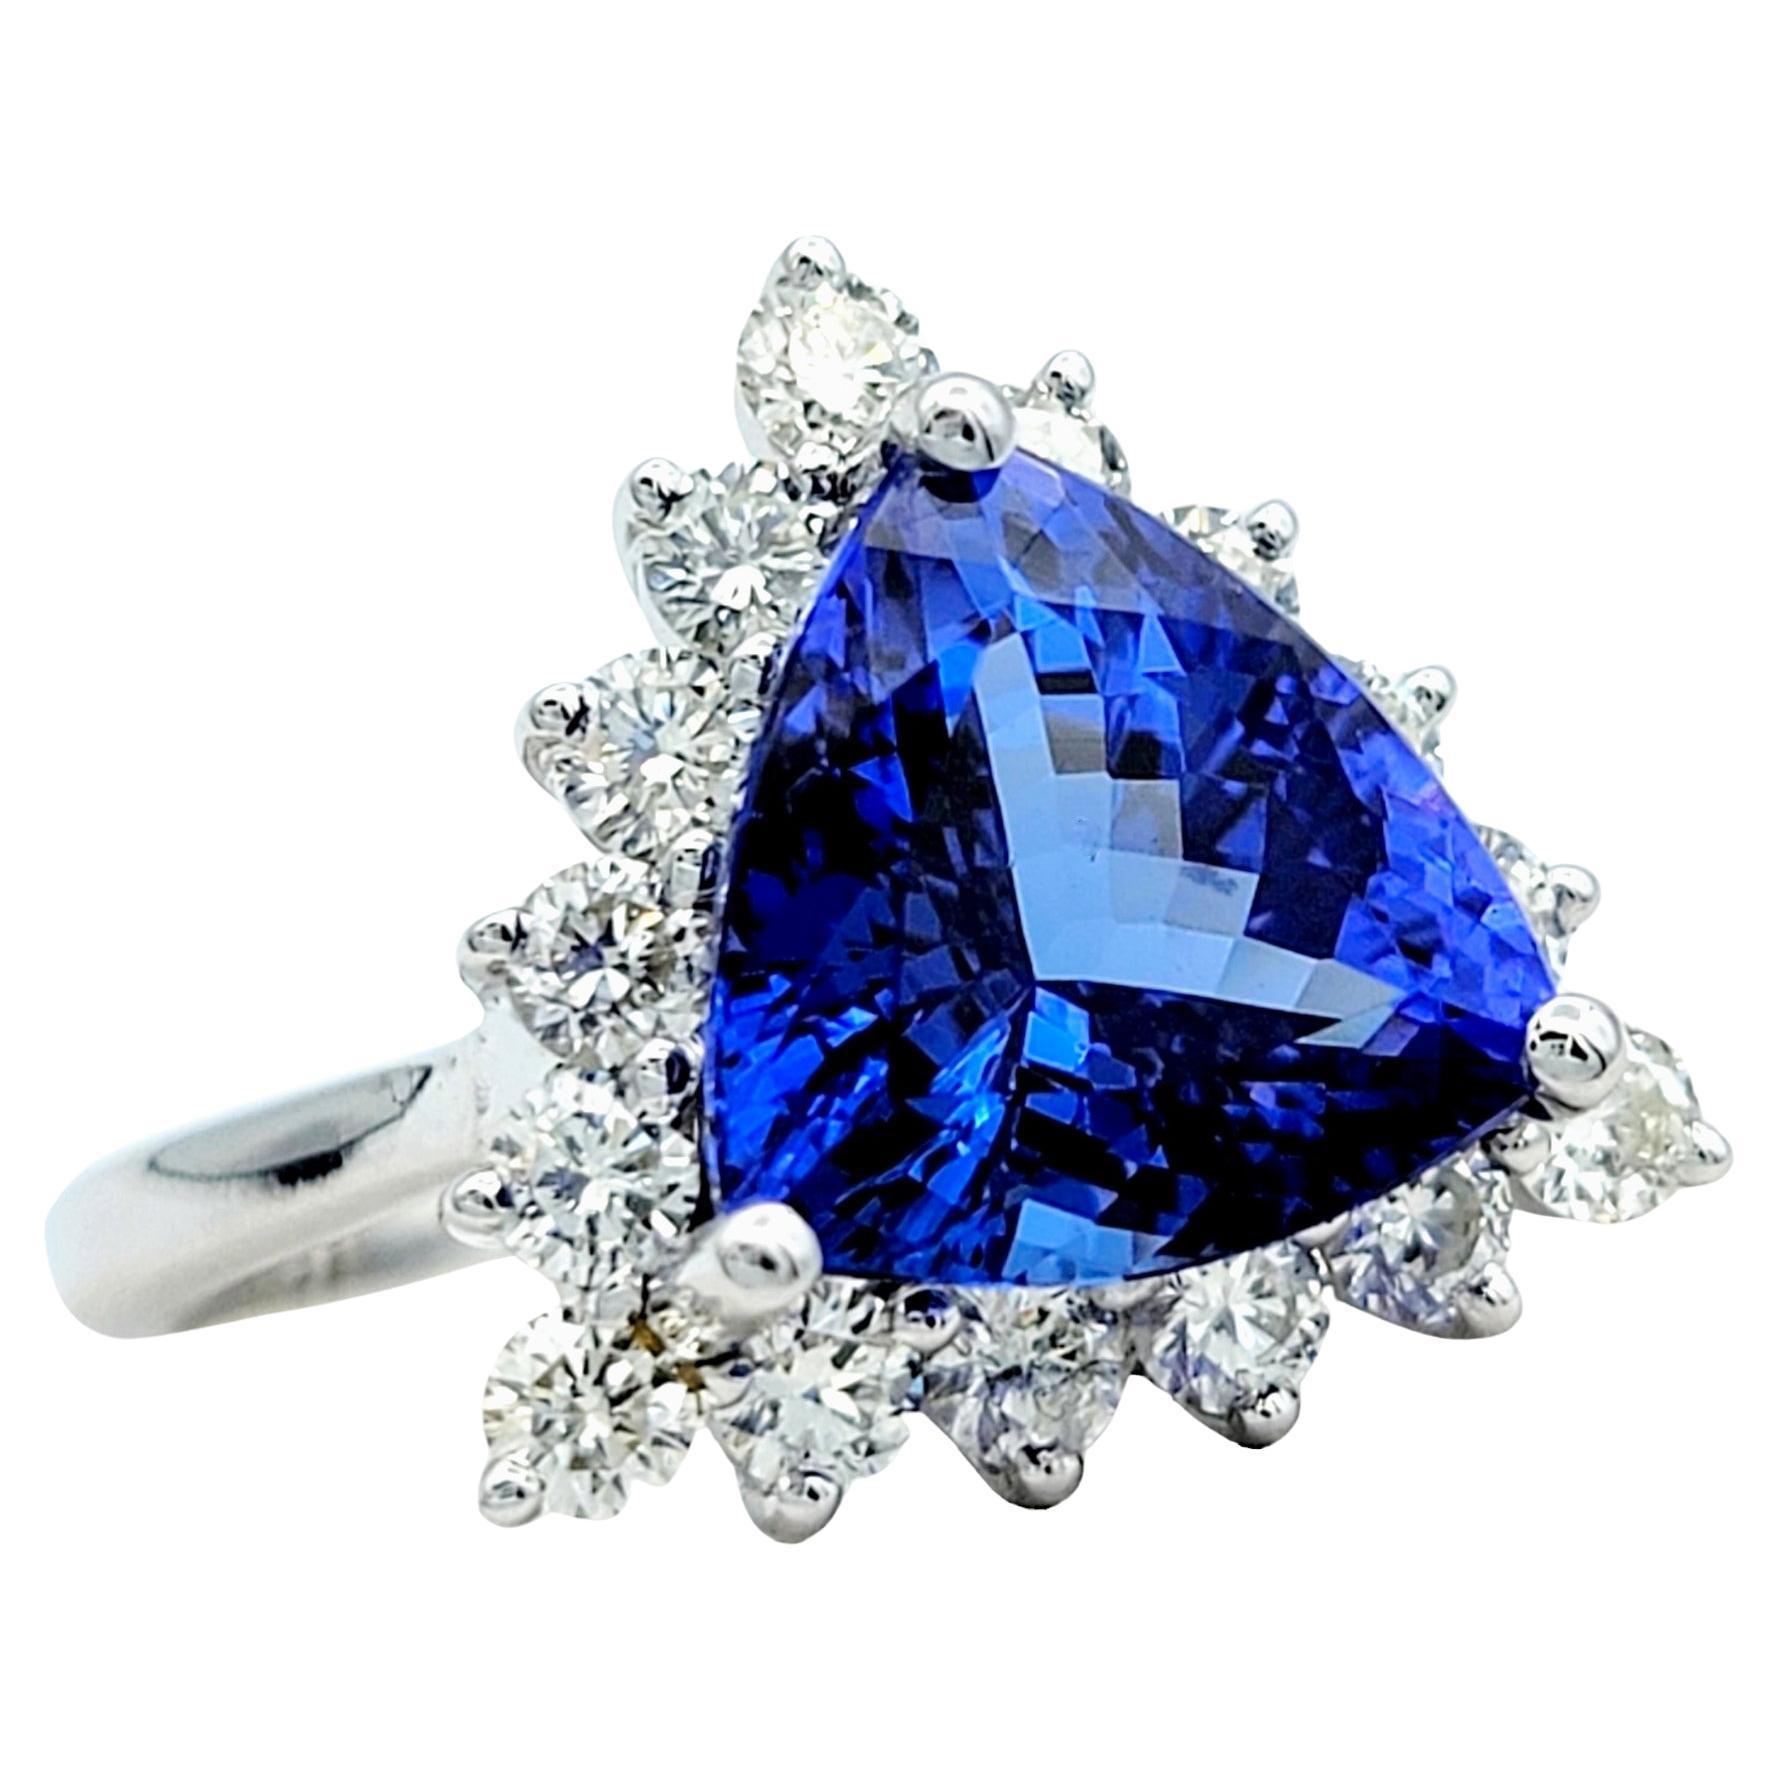 Trillion Cut Blue Tanzanite and Round Diamond Halo Ring in 14 Karat White Gold